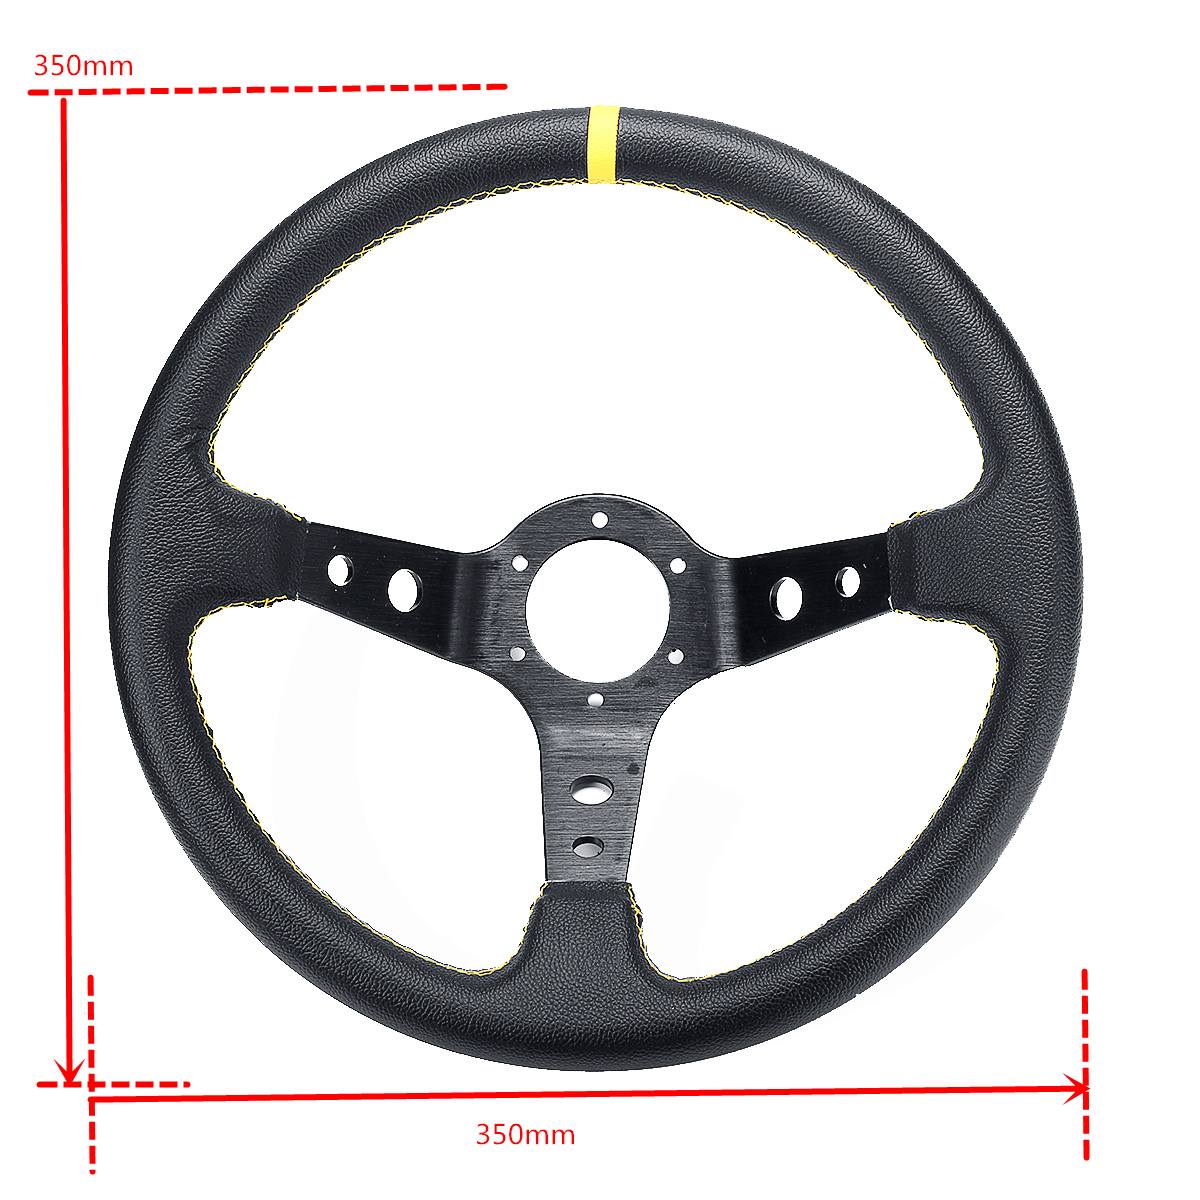 14inch 350mm Universal Car Racing Steering Wheel Auto Racing Sport Steering Wheel Accessories for BMW Akura etc.